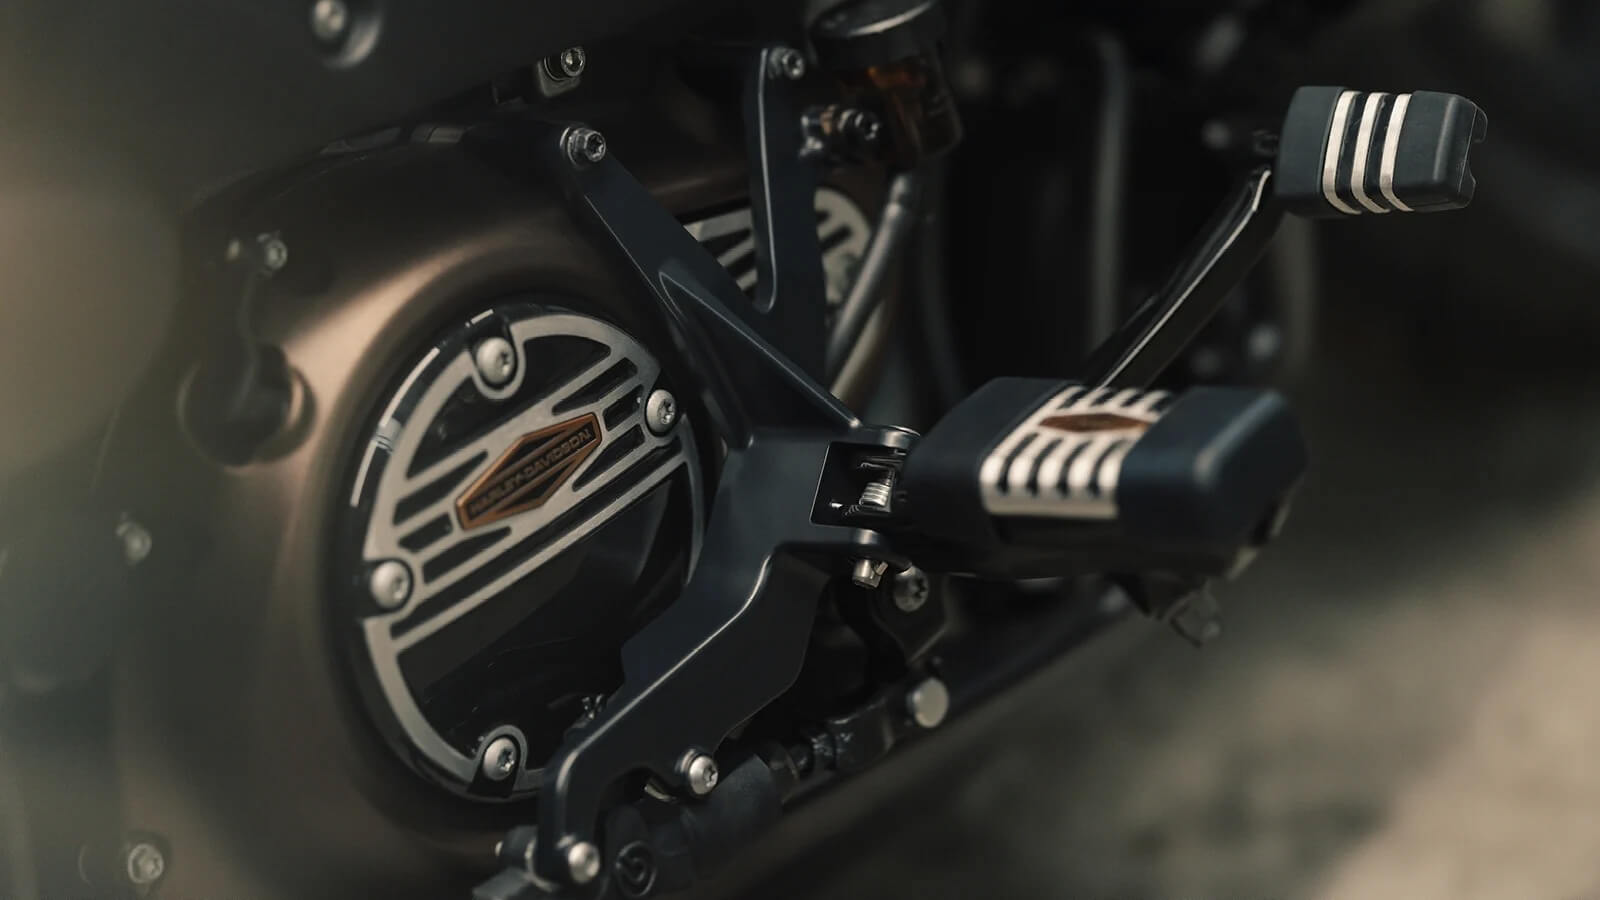  Harley-Davidson Sportster S